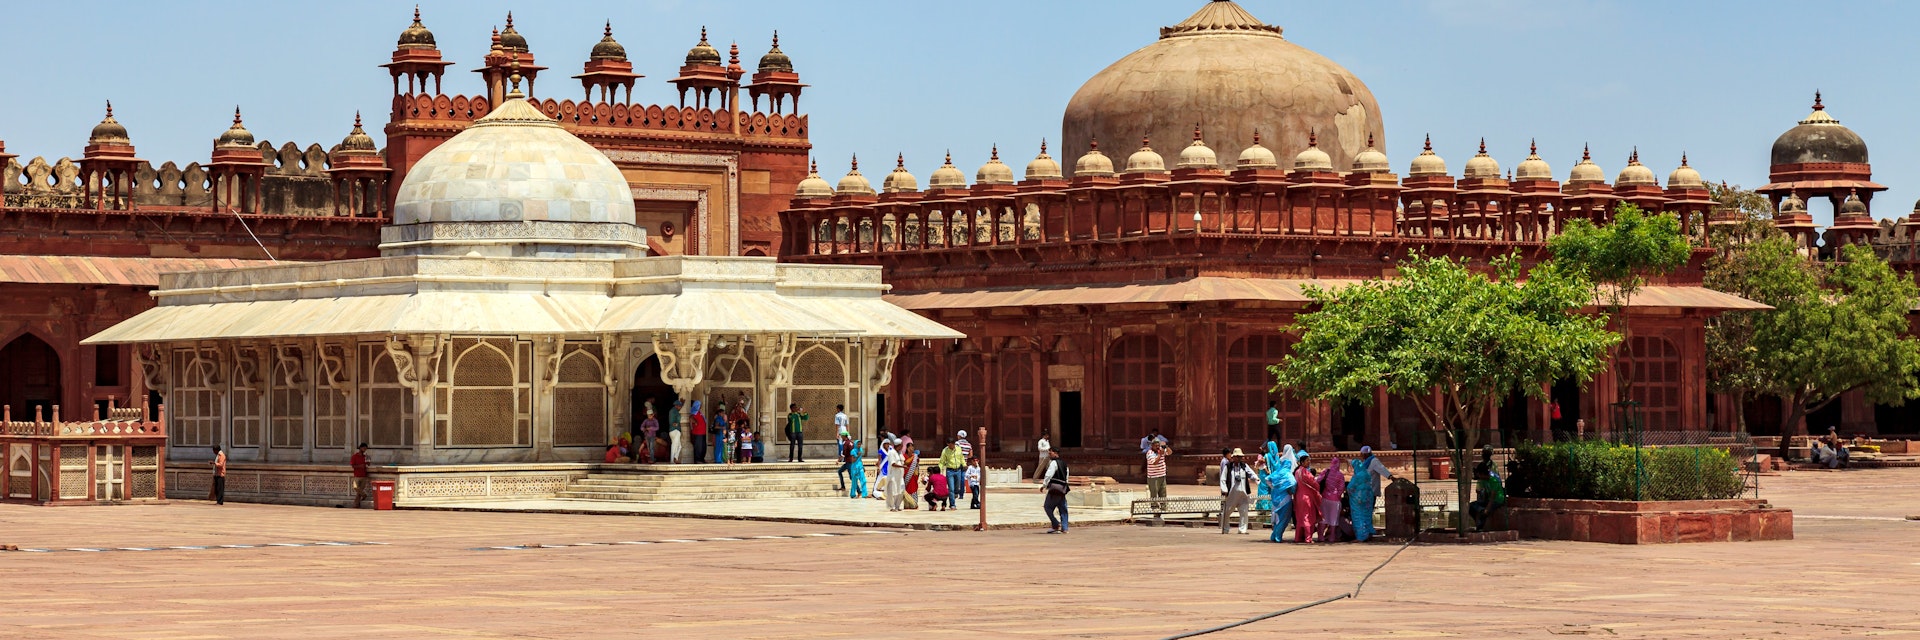 Agra, Uttar Pradesh, India - April 15, 2013: The Palace of Fatehpur Sikri in India